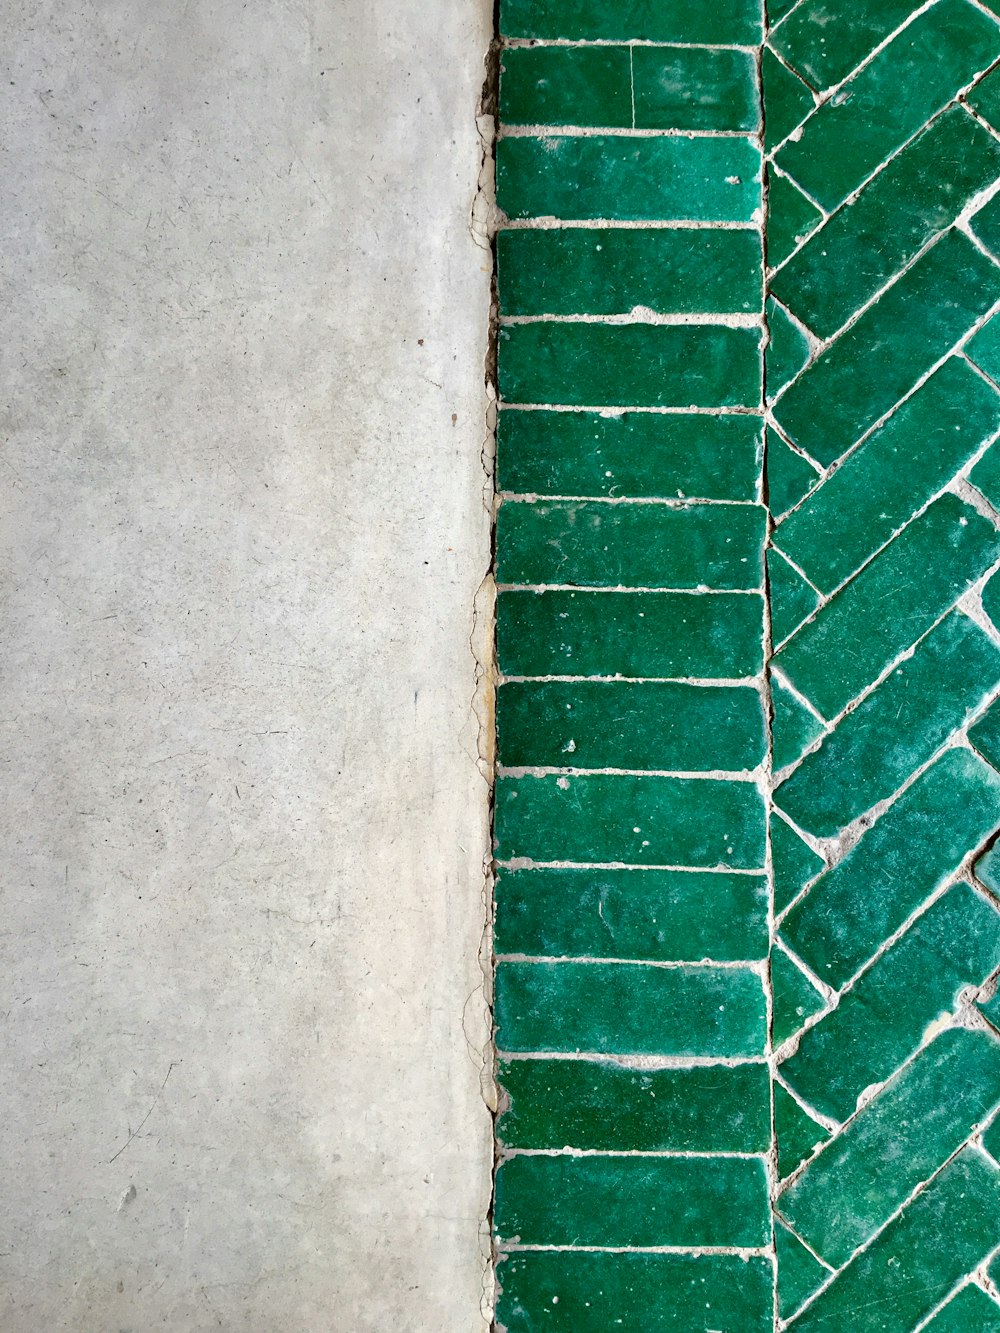 green tiled pavement